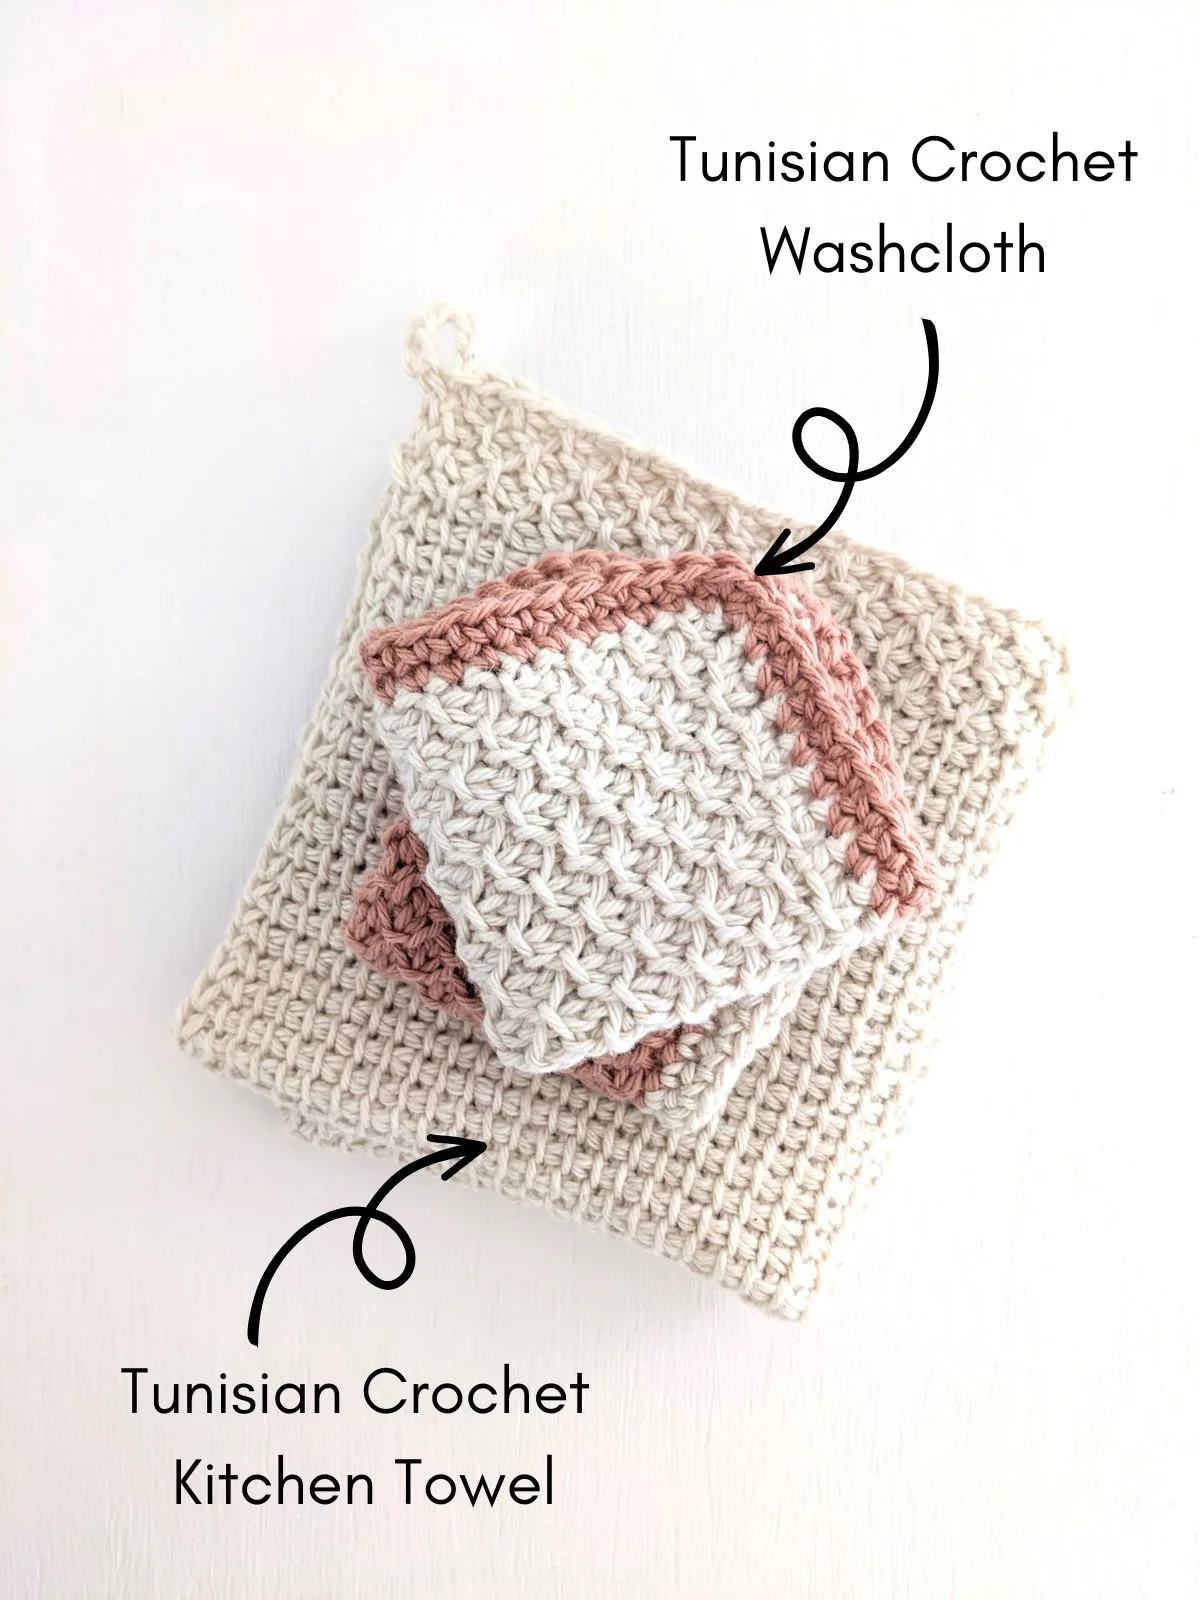 A crochet kitchen towel and washcloth set.